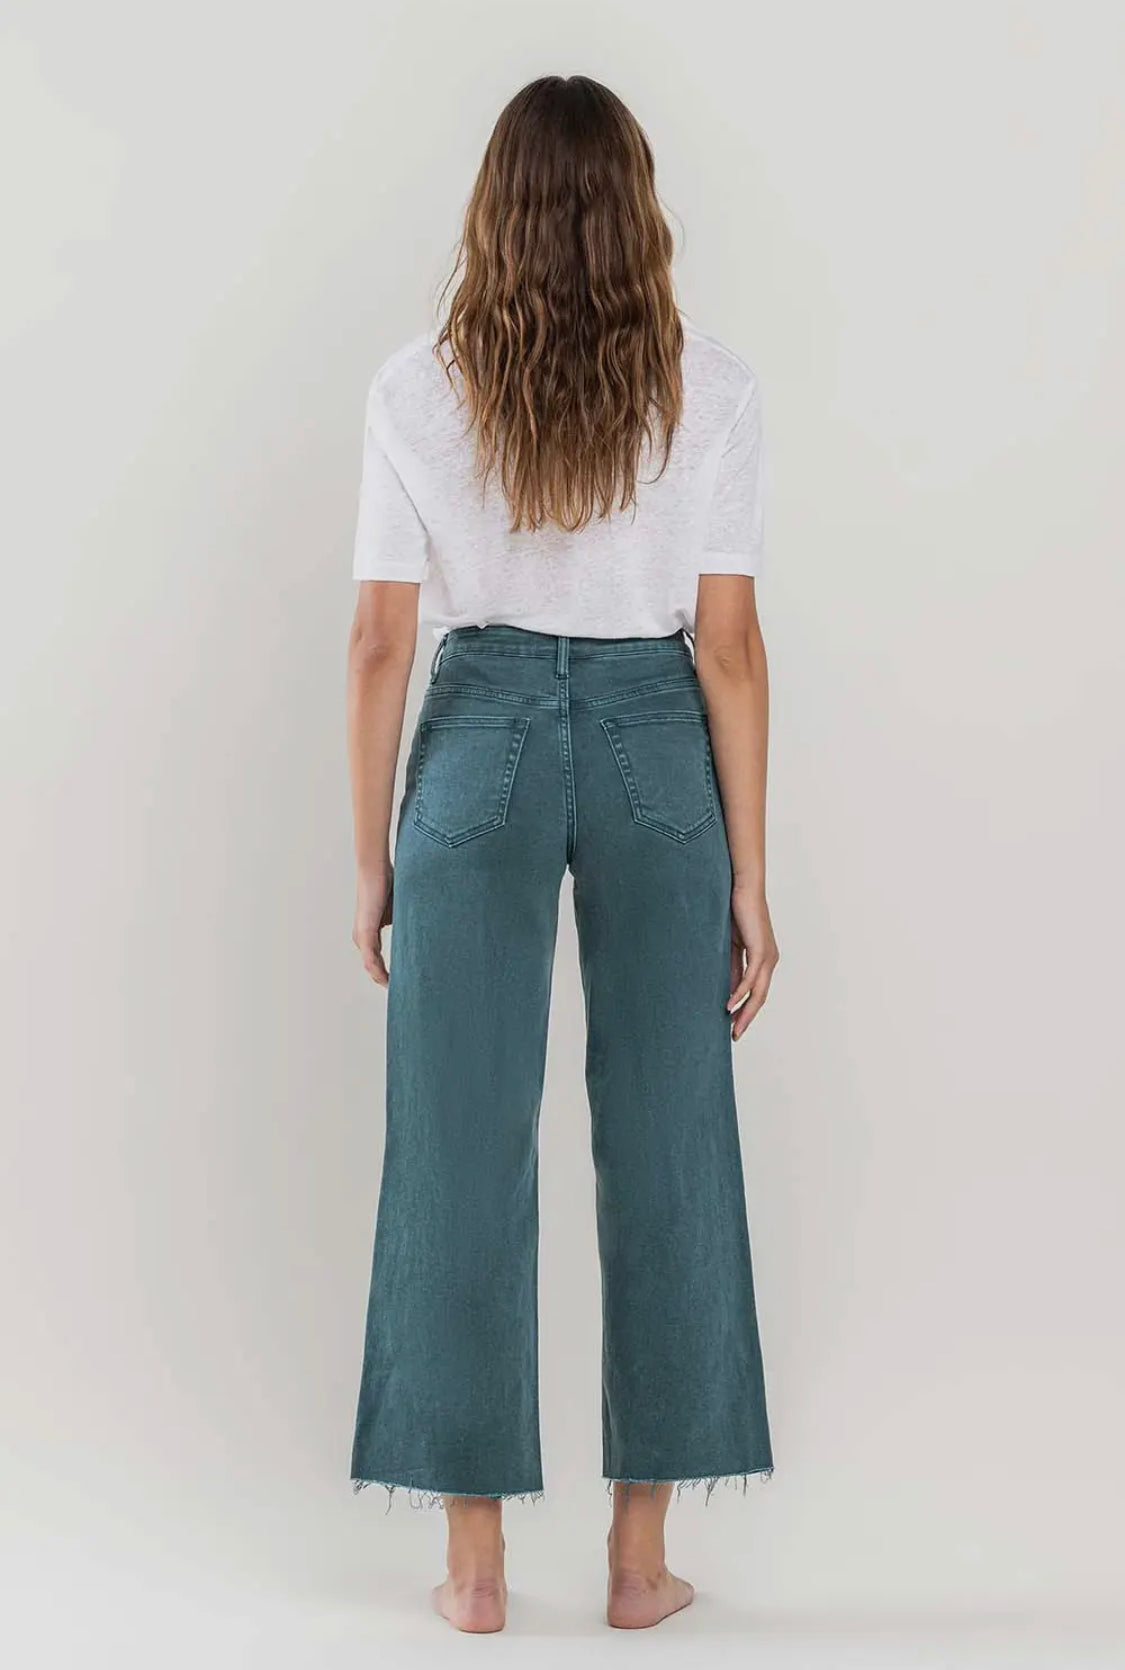 Sophia’s Jeans-Balsam